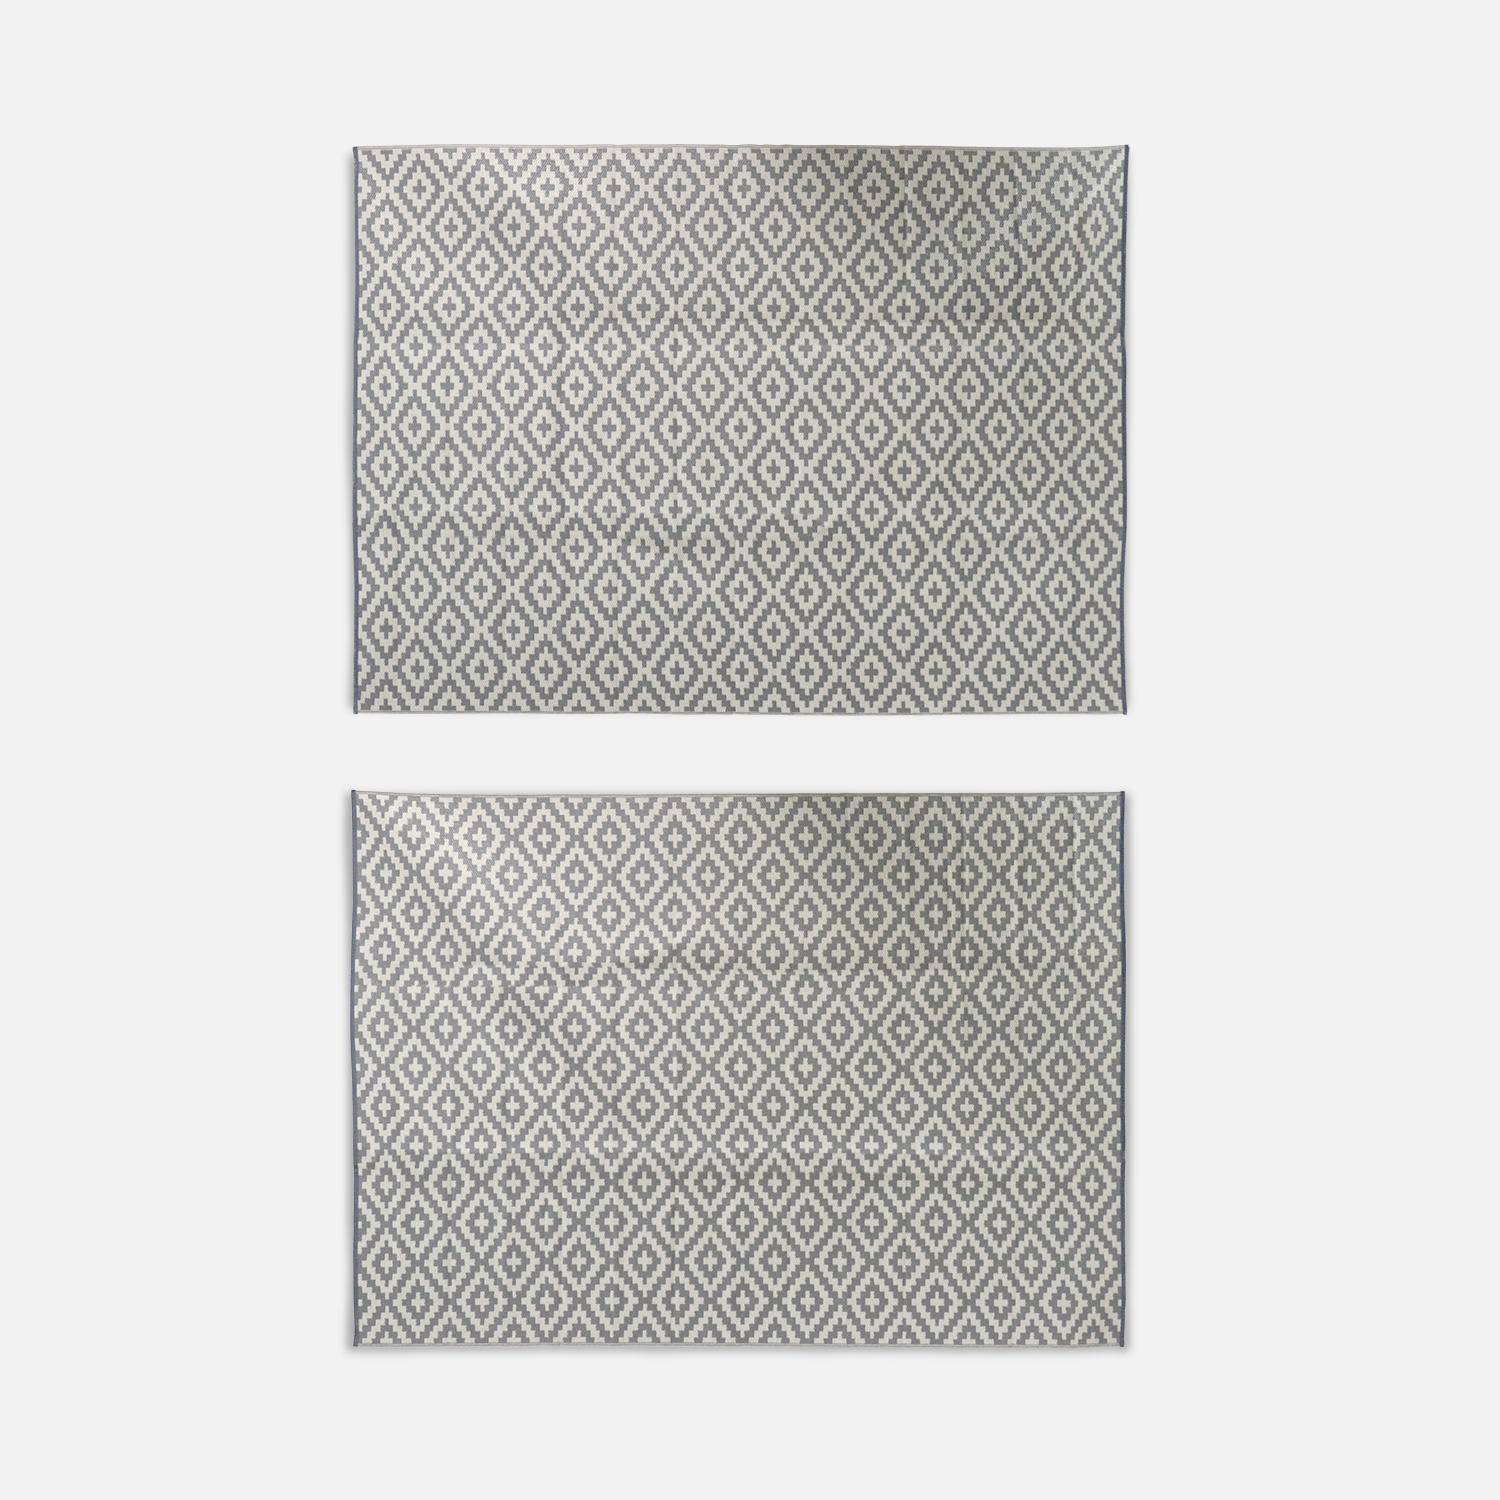 Tappeto per esterni 270x360cm STOCKHOLM - Rettangolare, motivo diamante kaki, jacquard, reversibile, interno/esterno, Photo2